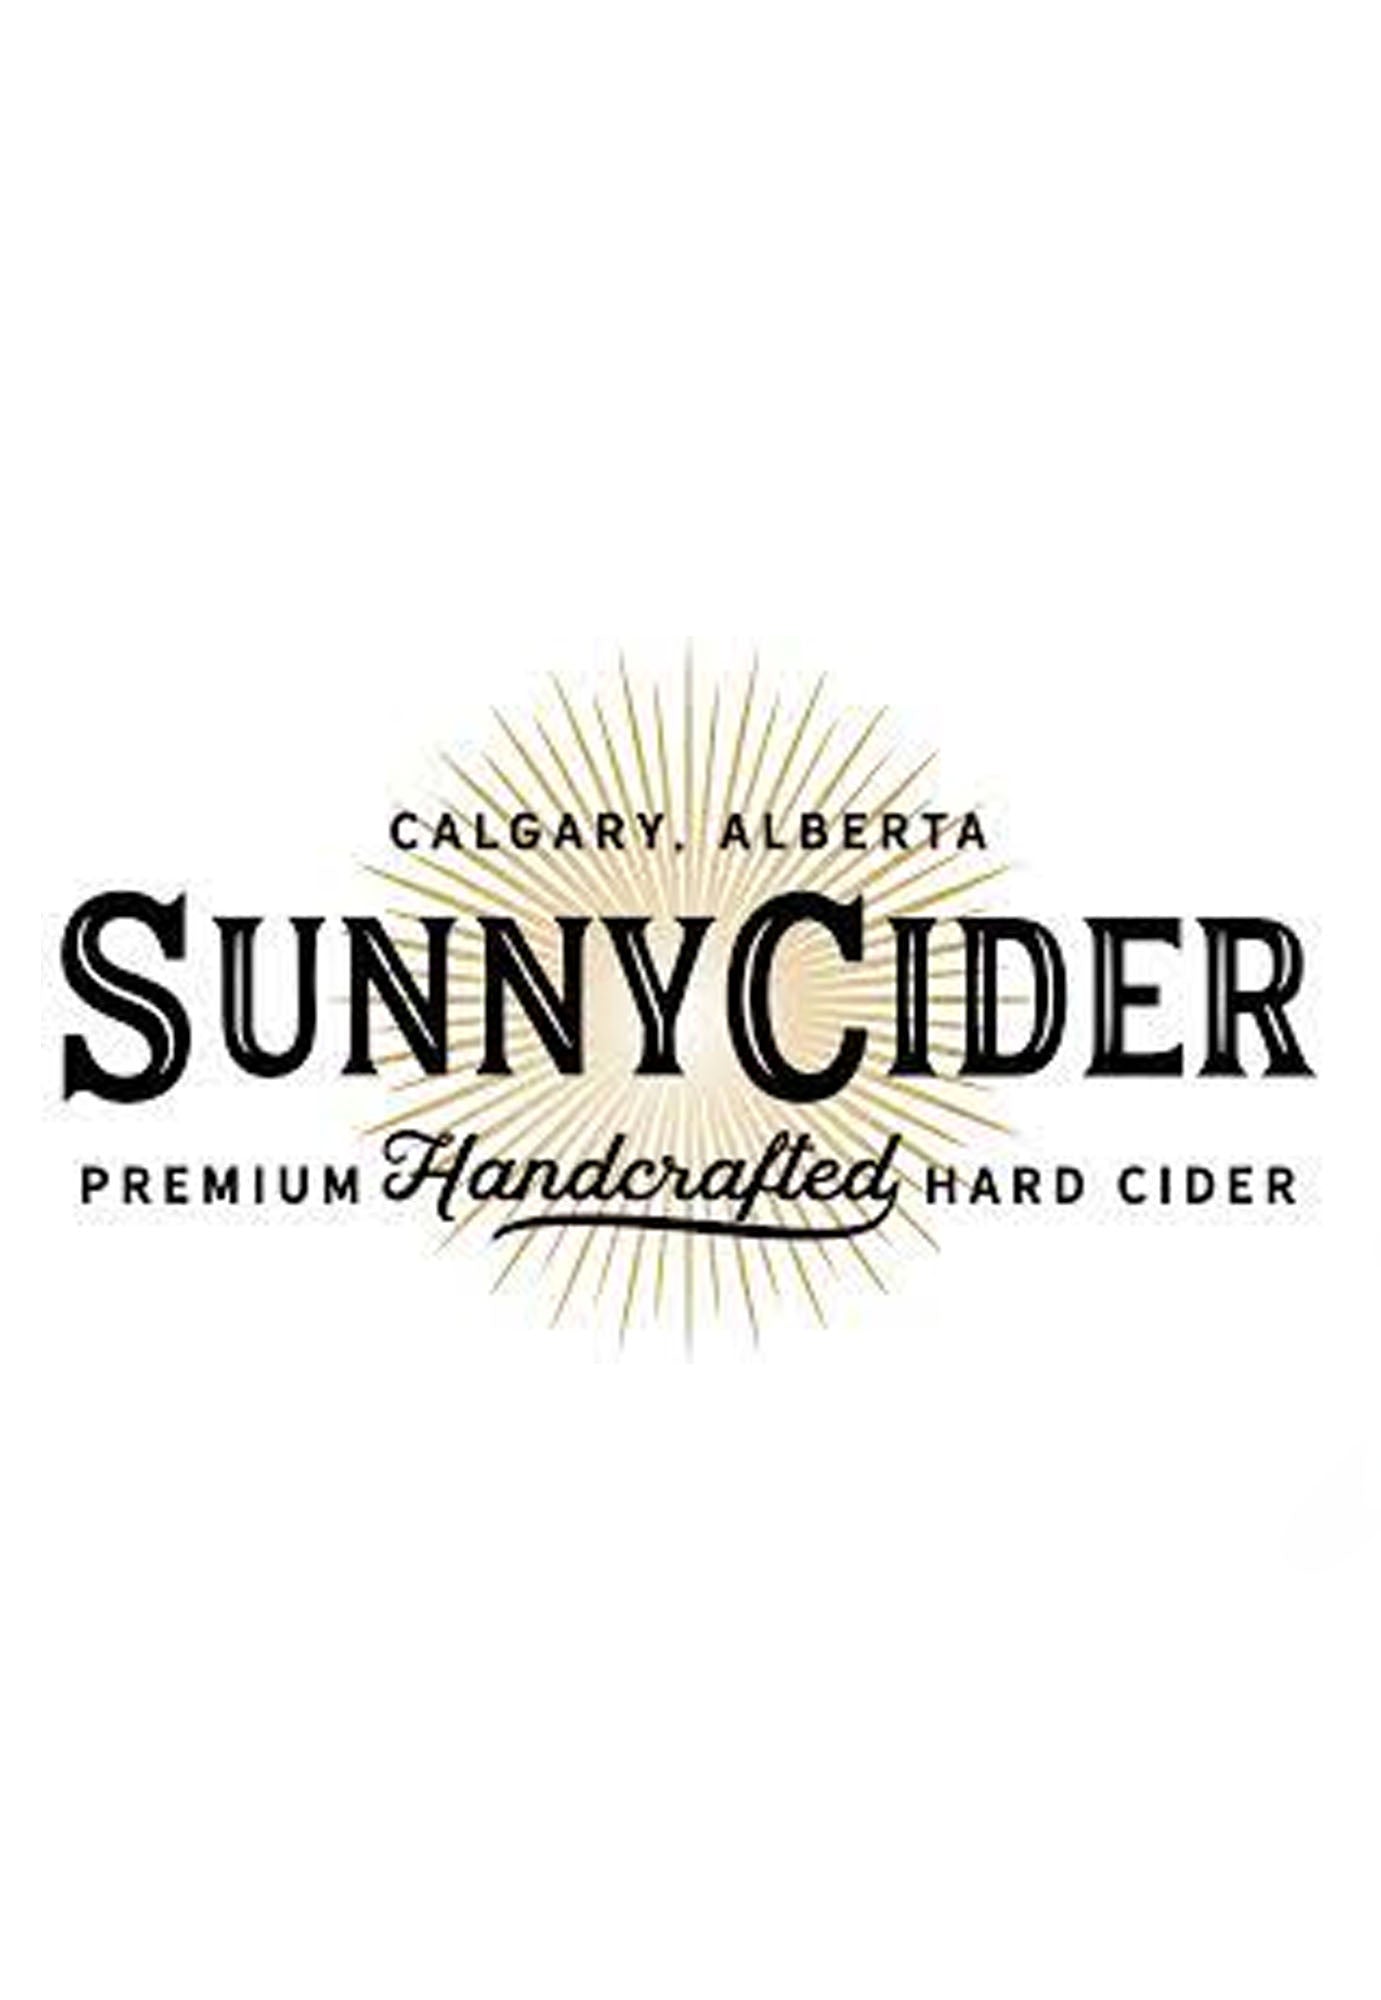 SunnyCider Bramble On Cider 473 ml - 4 Cans